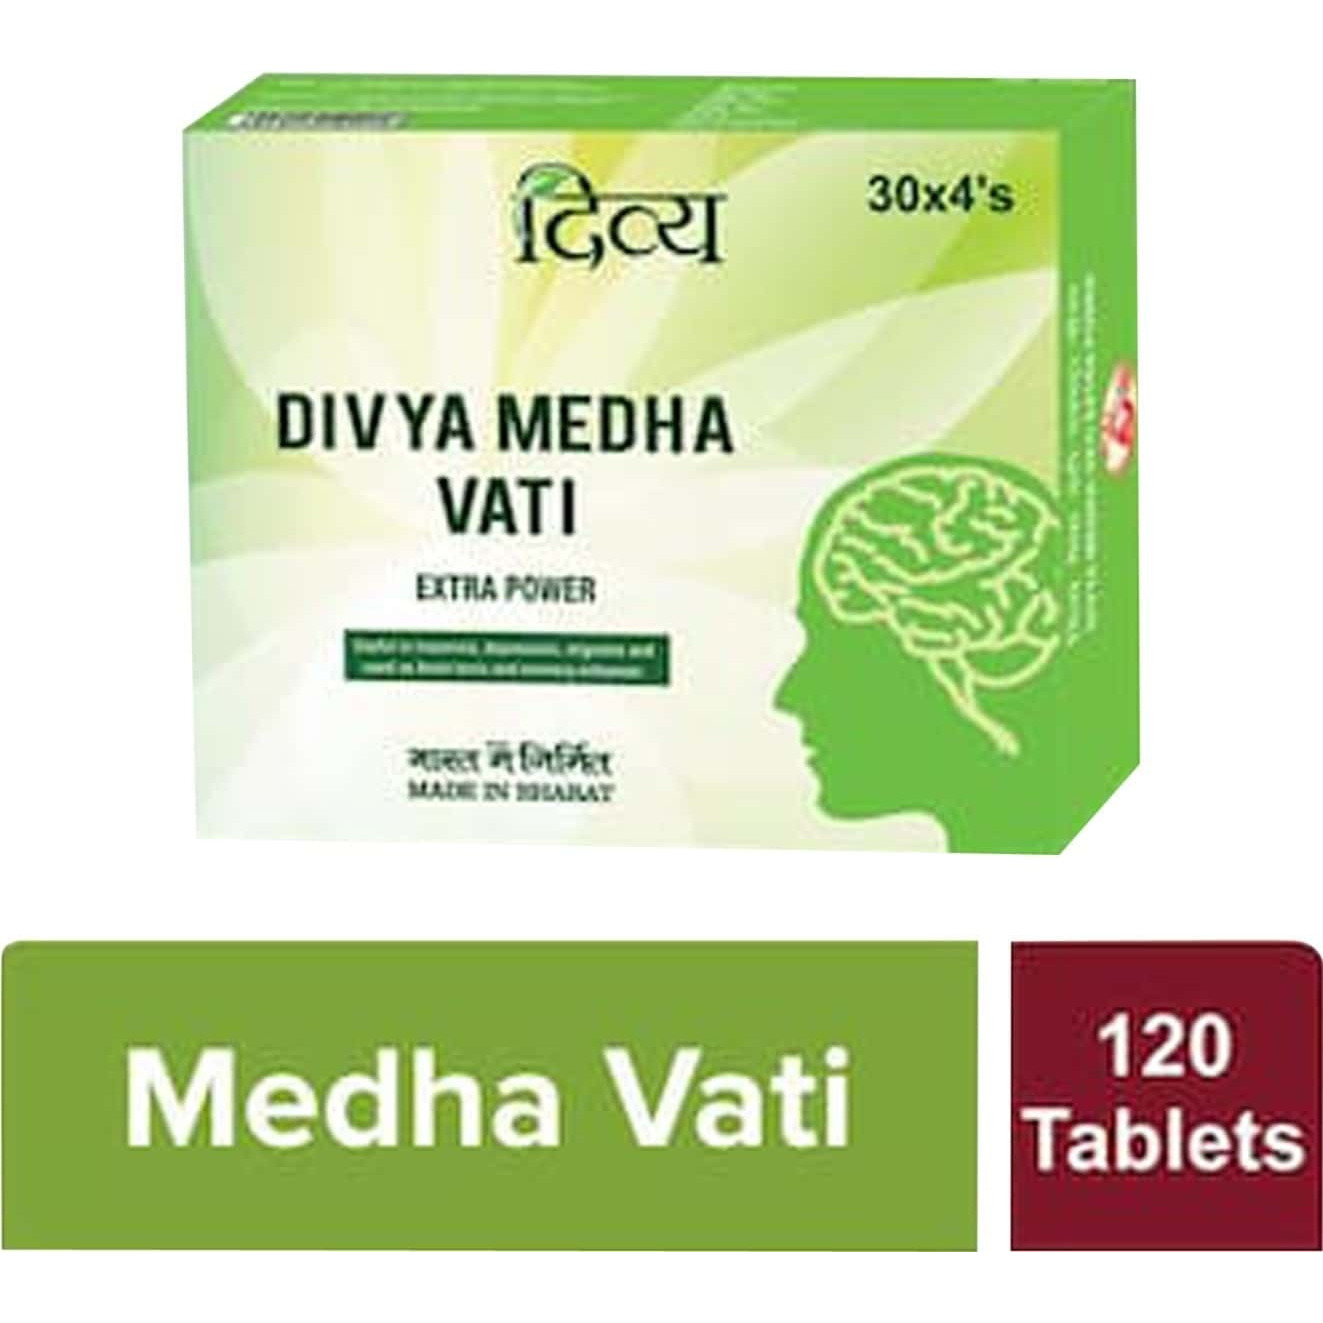 Divya Medha Vati Extra Power - 120 Tablets